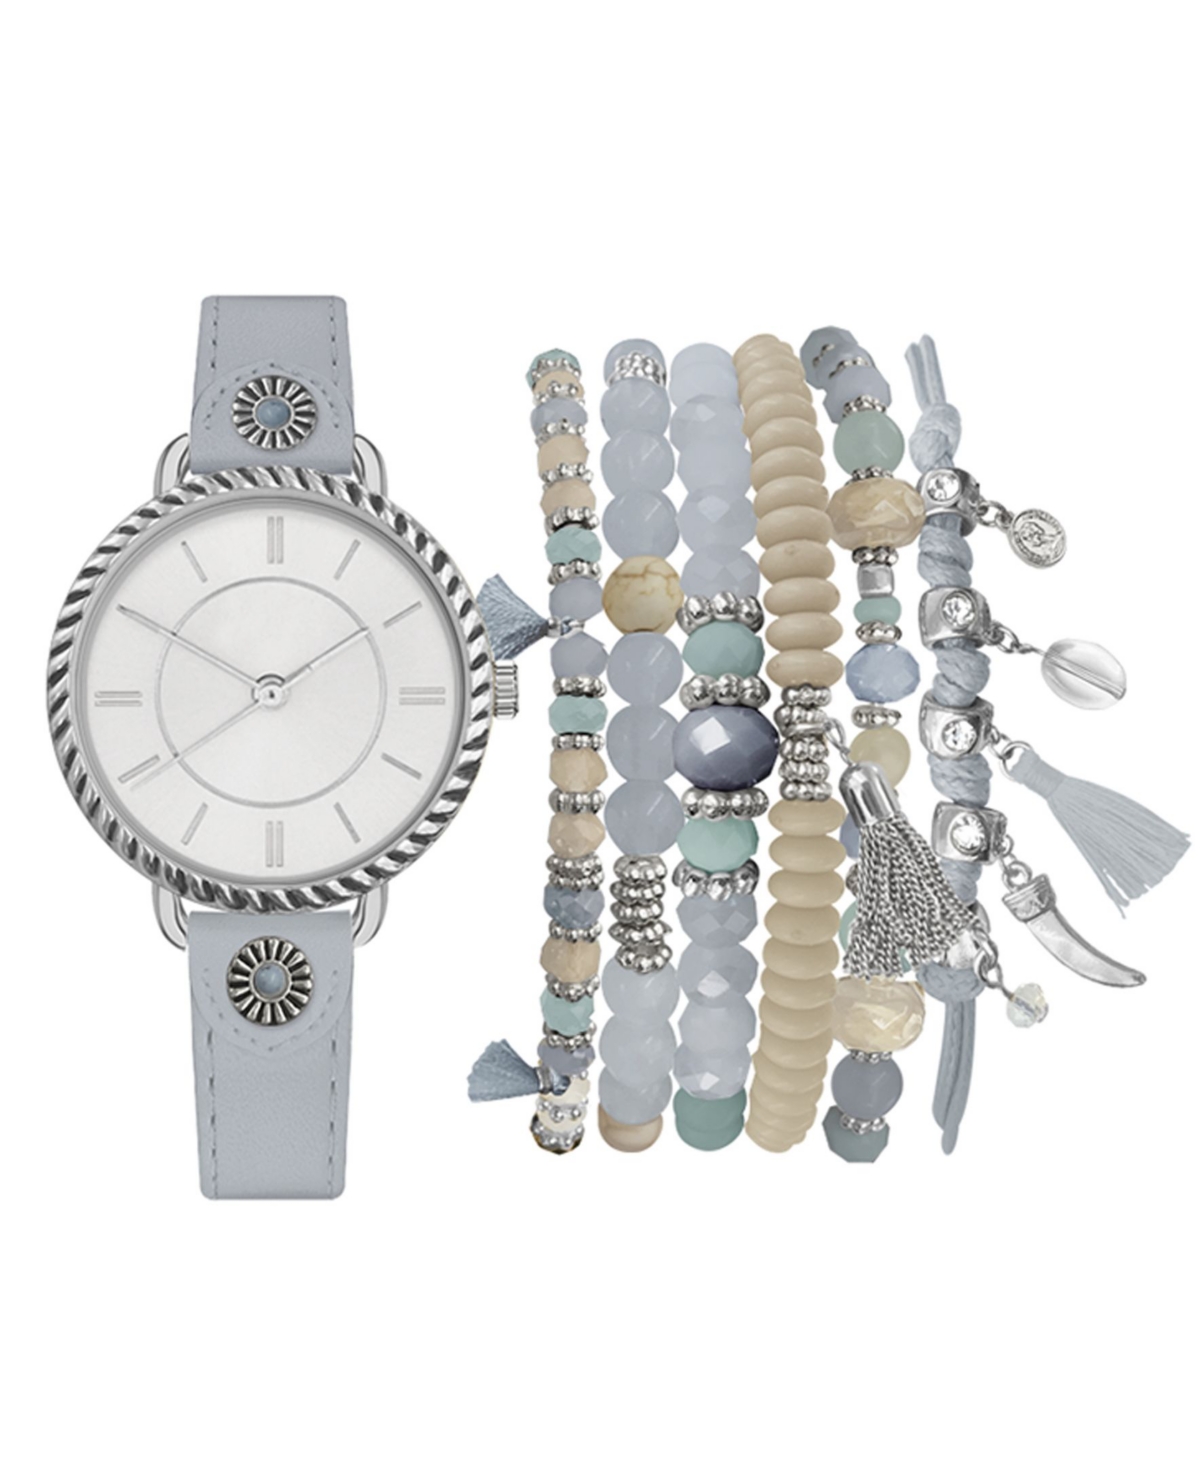 Women's Analog Gray Strap Watch 32mm with Beaded Bracelets Set - Gray